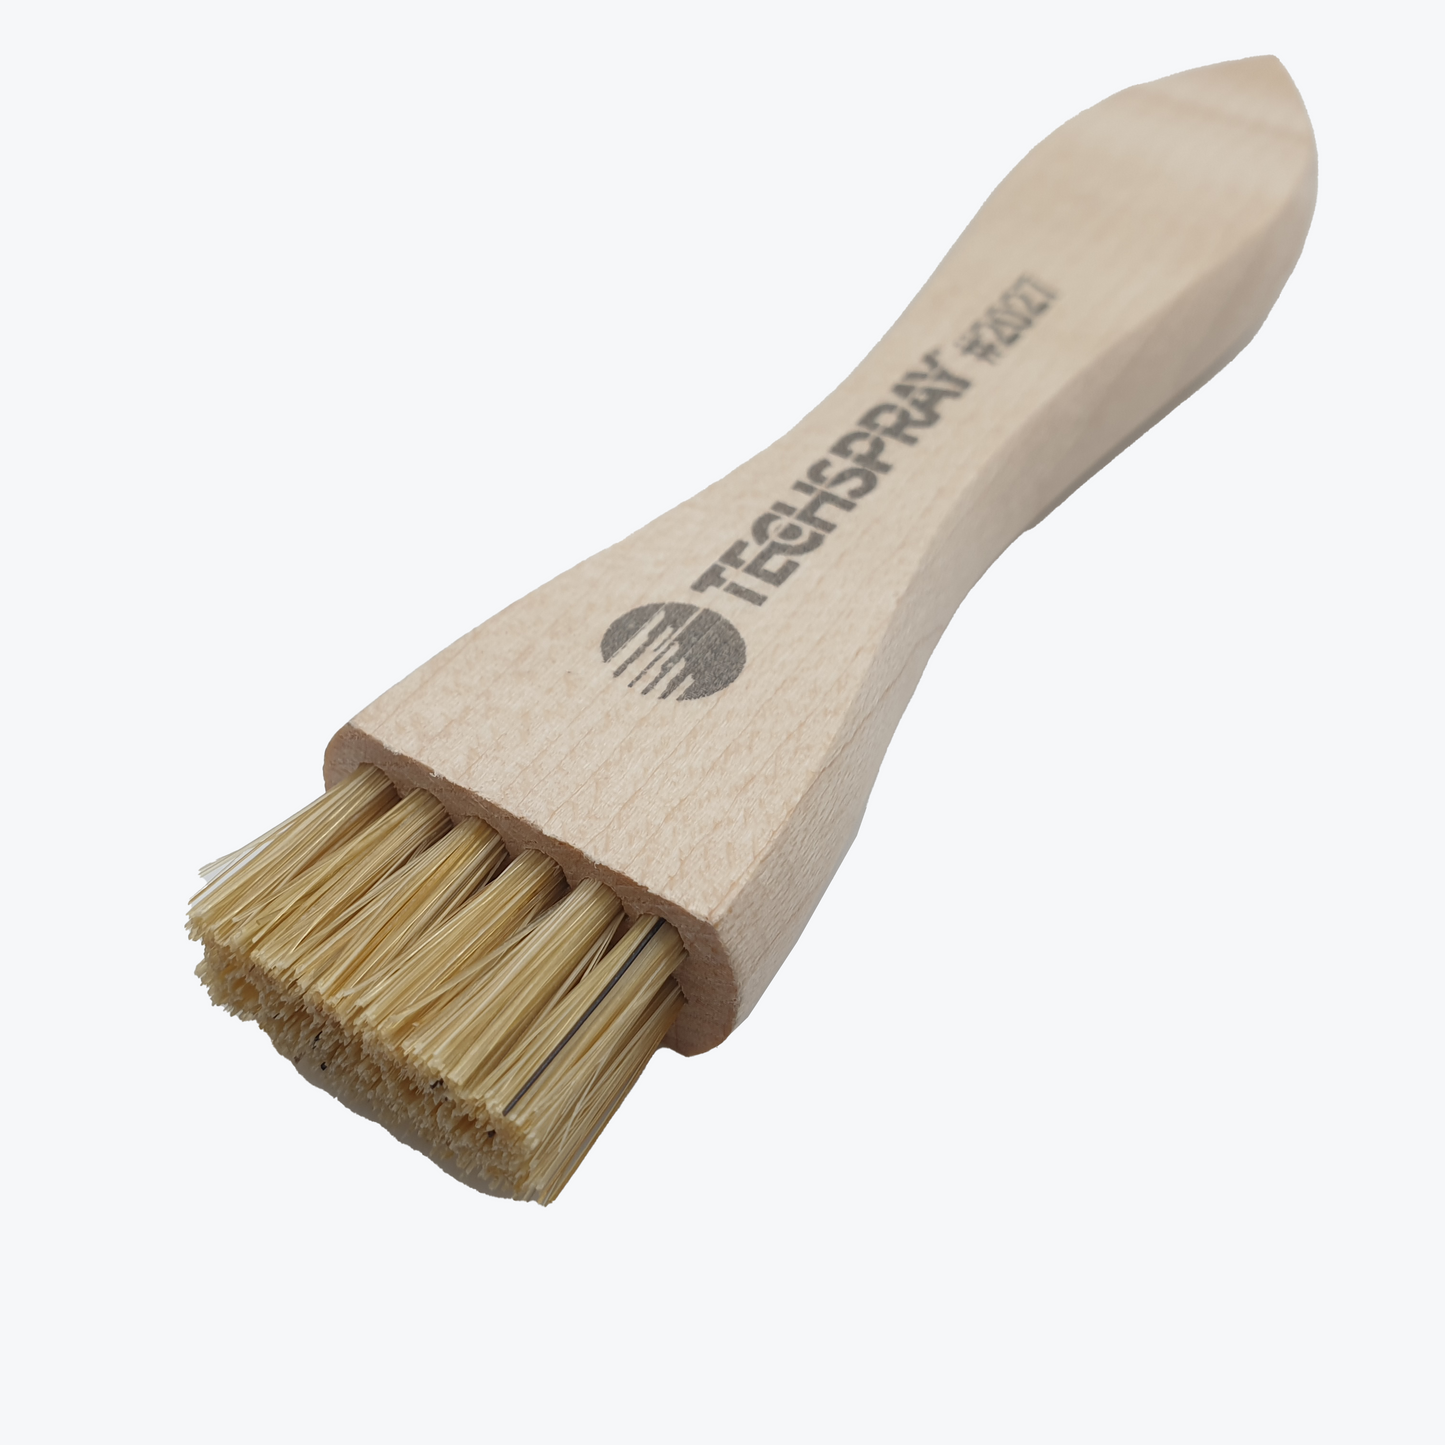 Techspray antistatic hog hair brush for cleaning sensitive pcb board